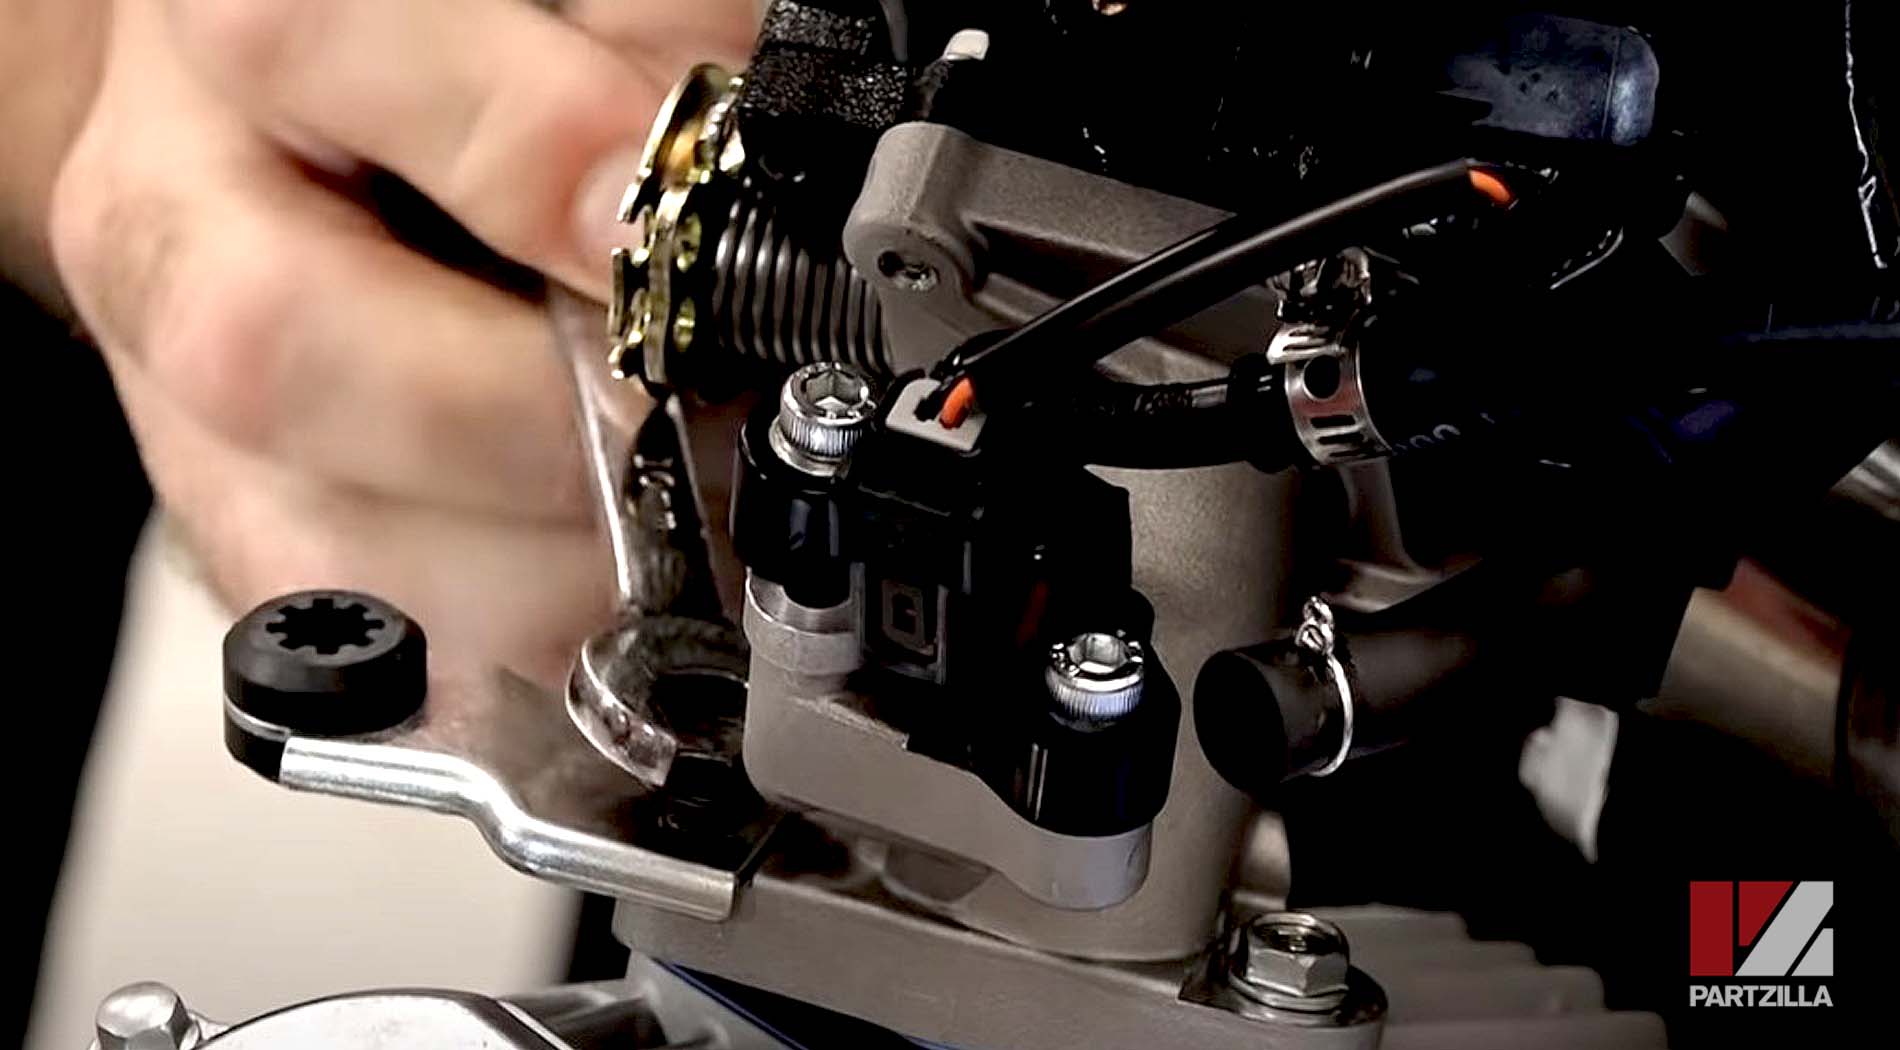 2018 Honda Grom KOSO aftermaket throttle assembly upgrade installation